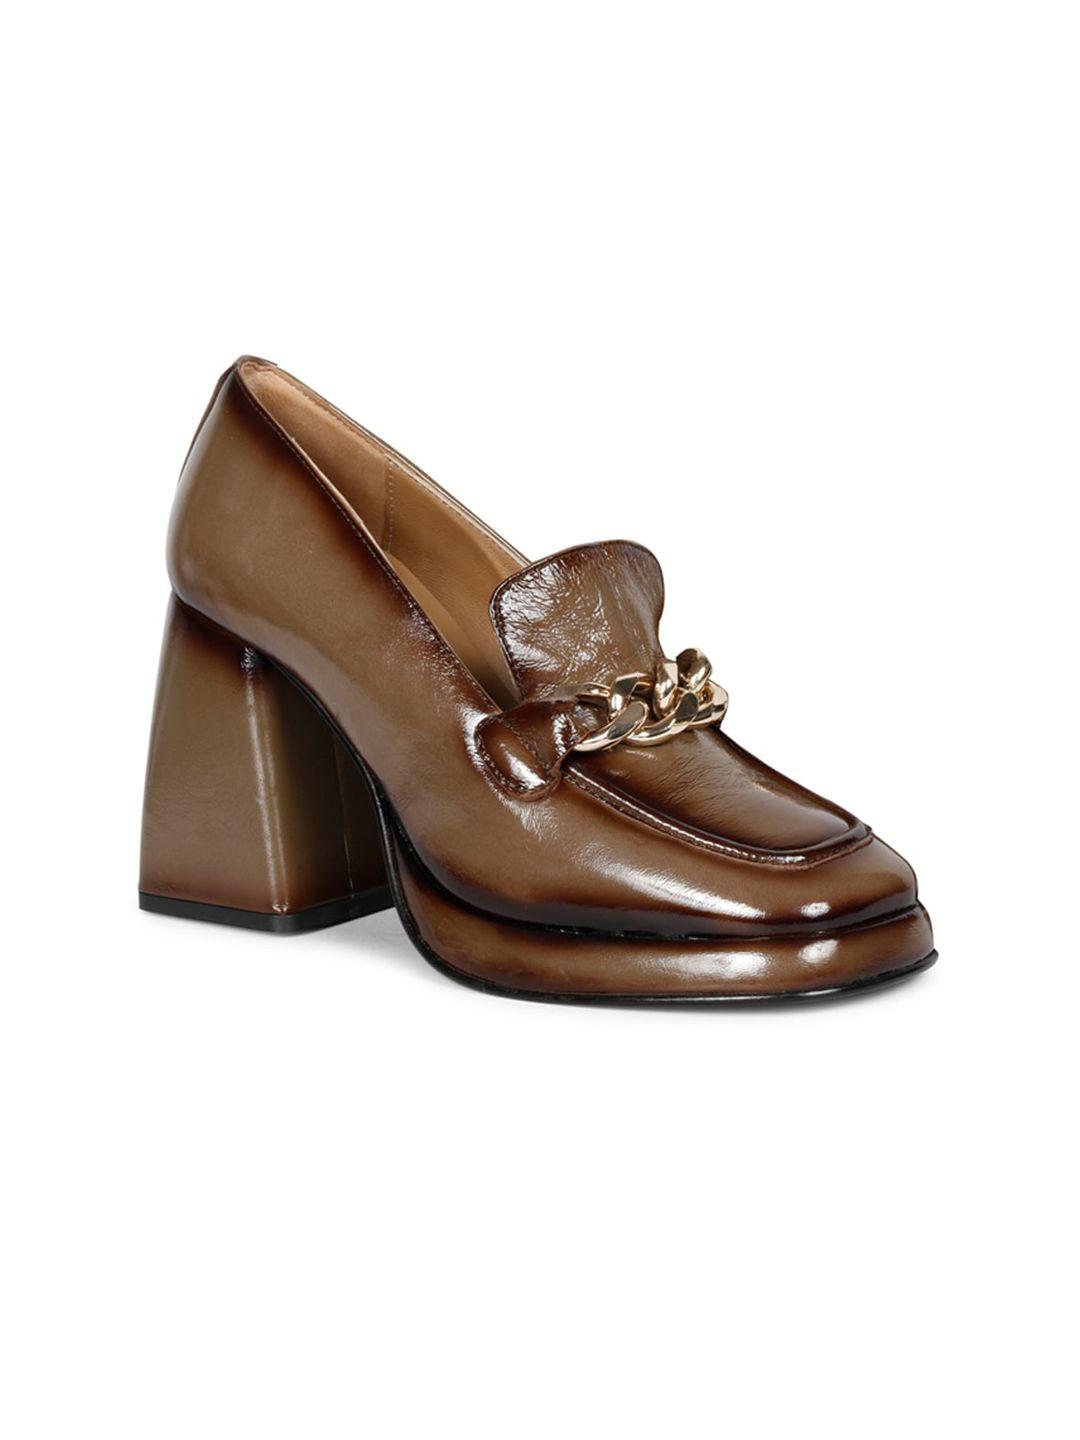 saint g taupe patent leather block heels pumps